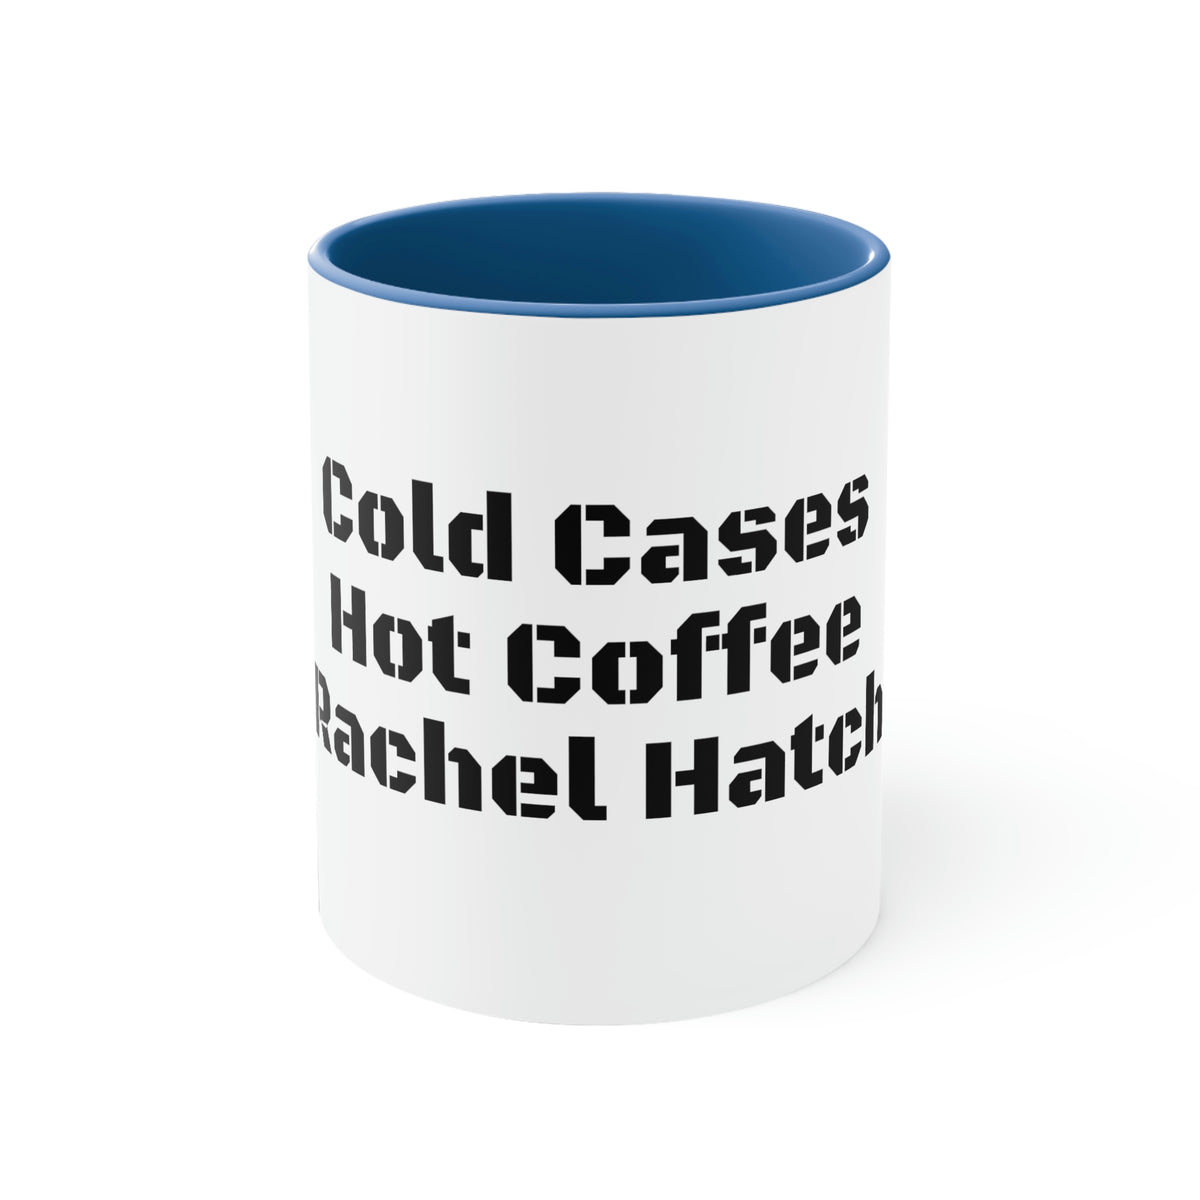 Cold Cases, Hot Coffee Rachel Hatch